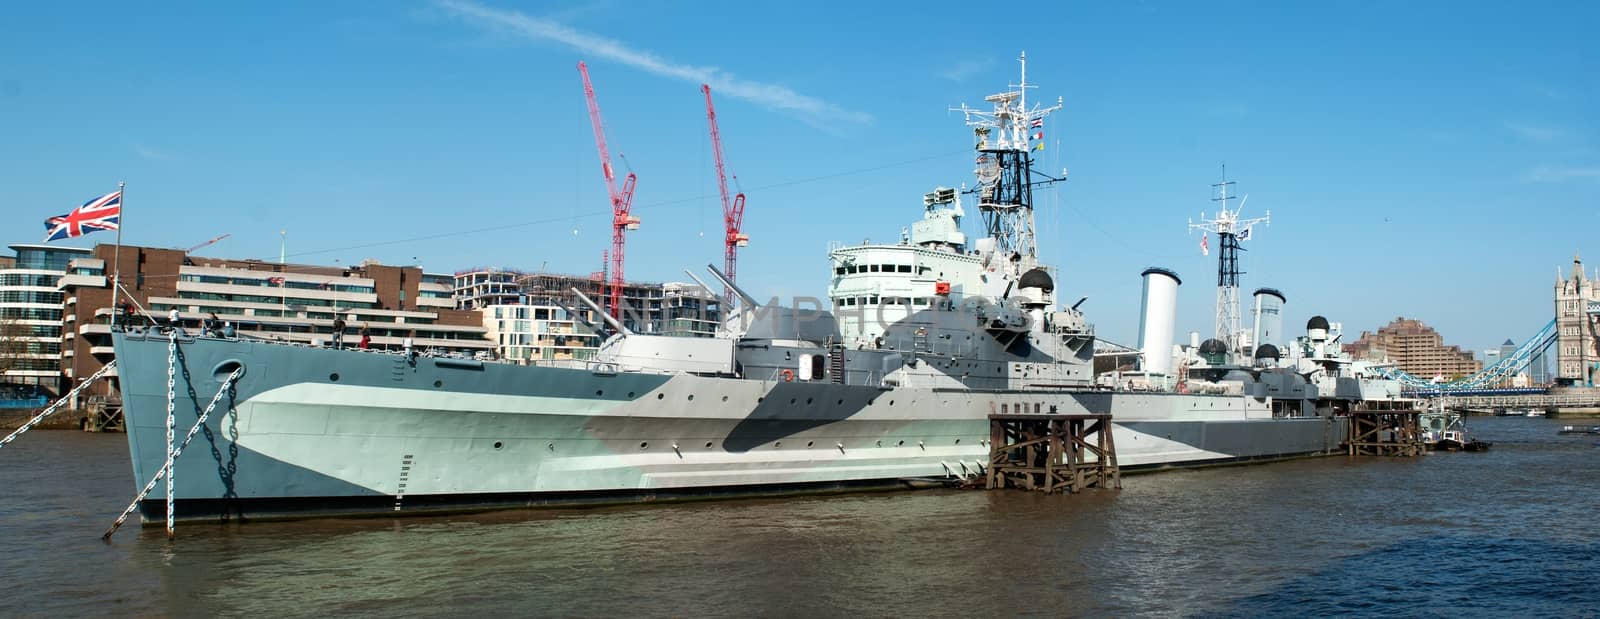 HMS Belfast and Tower Bridge in London by mitakag